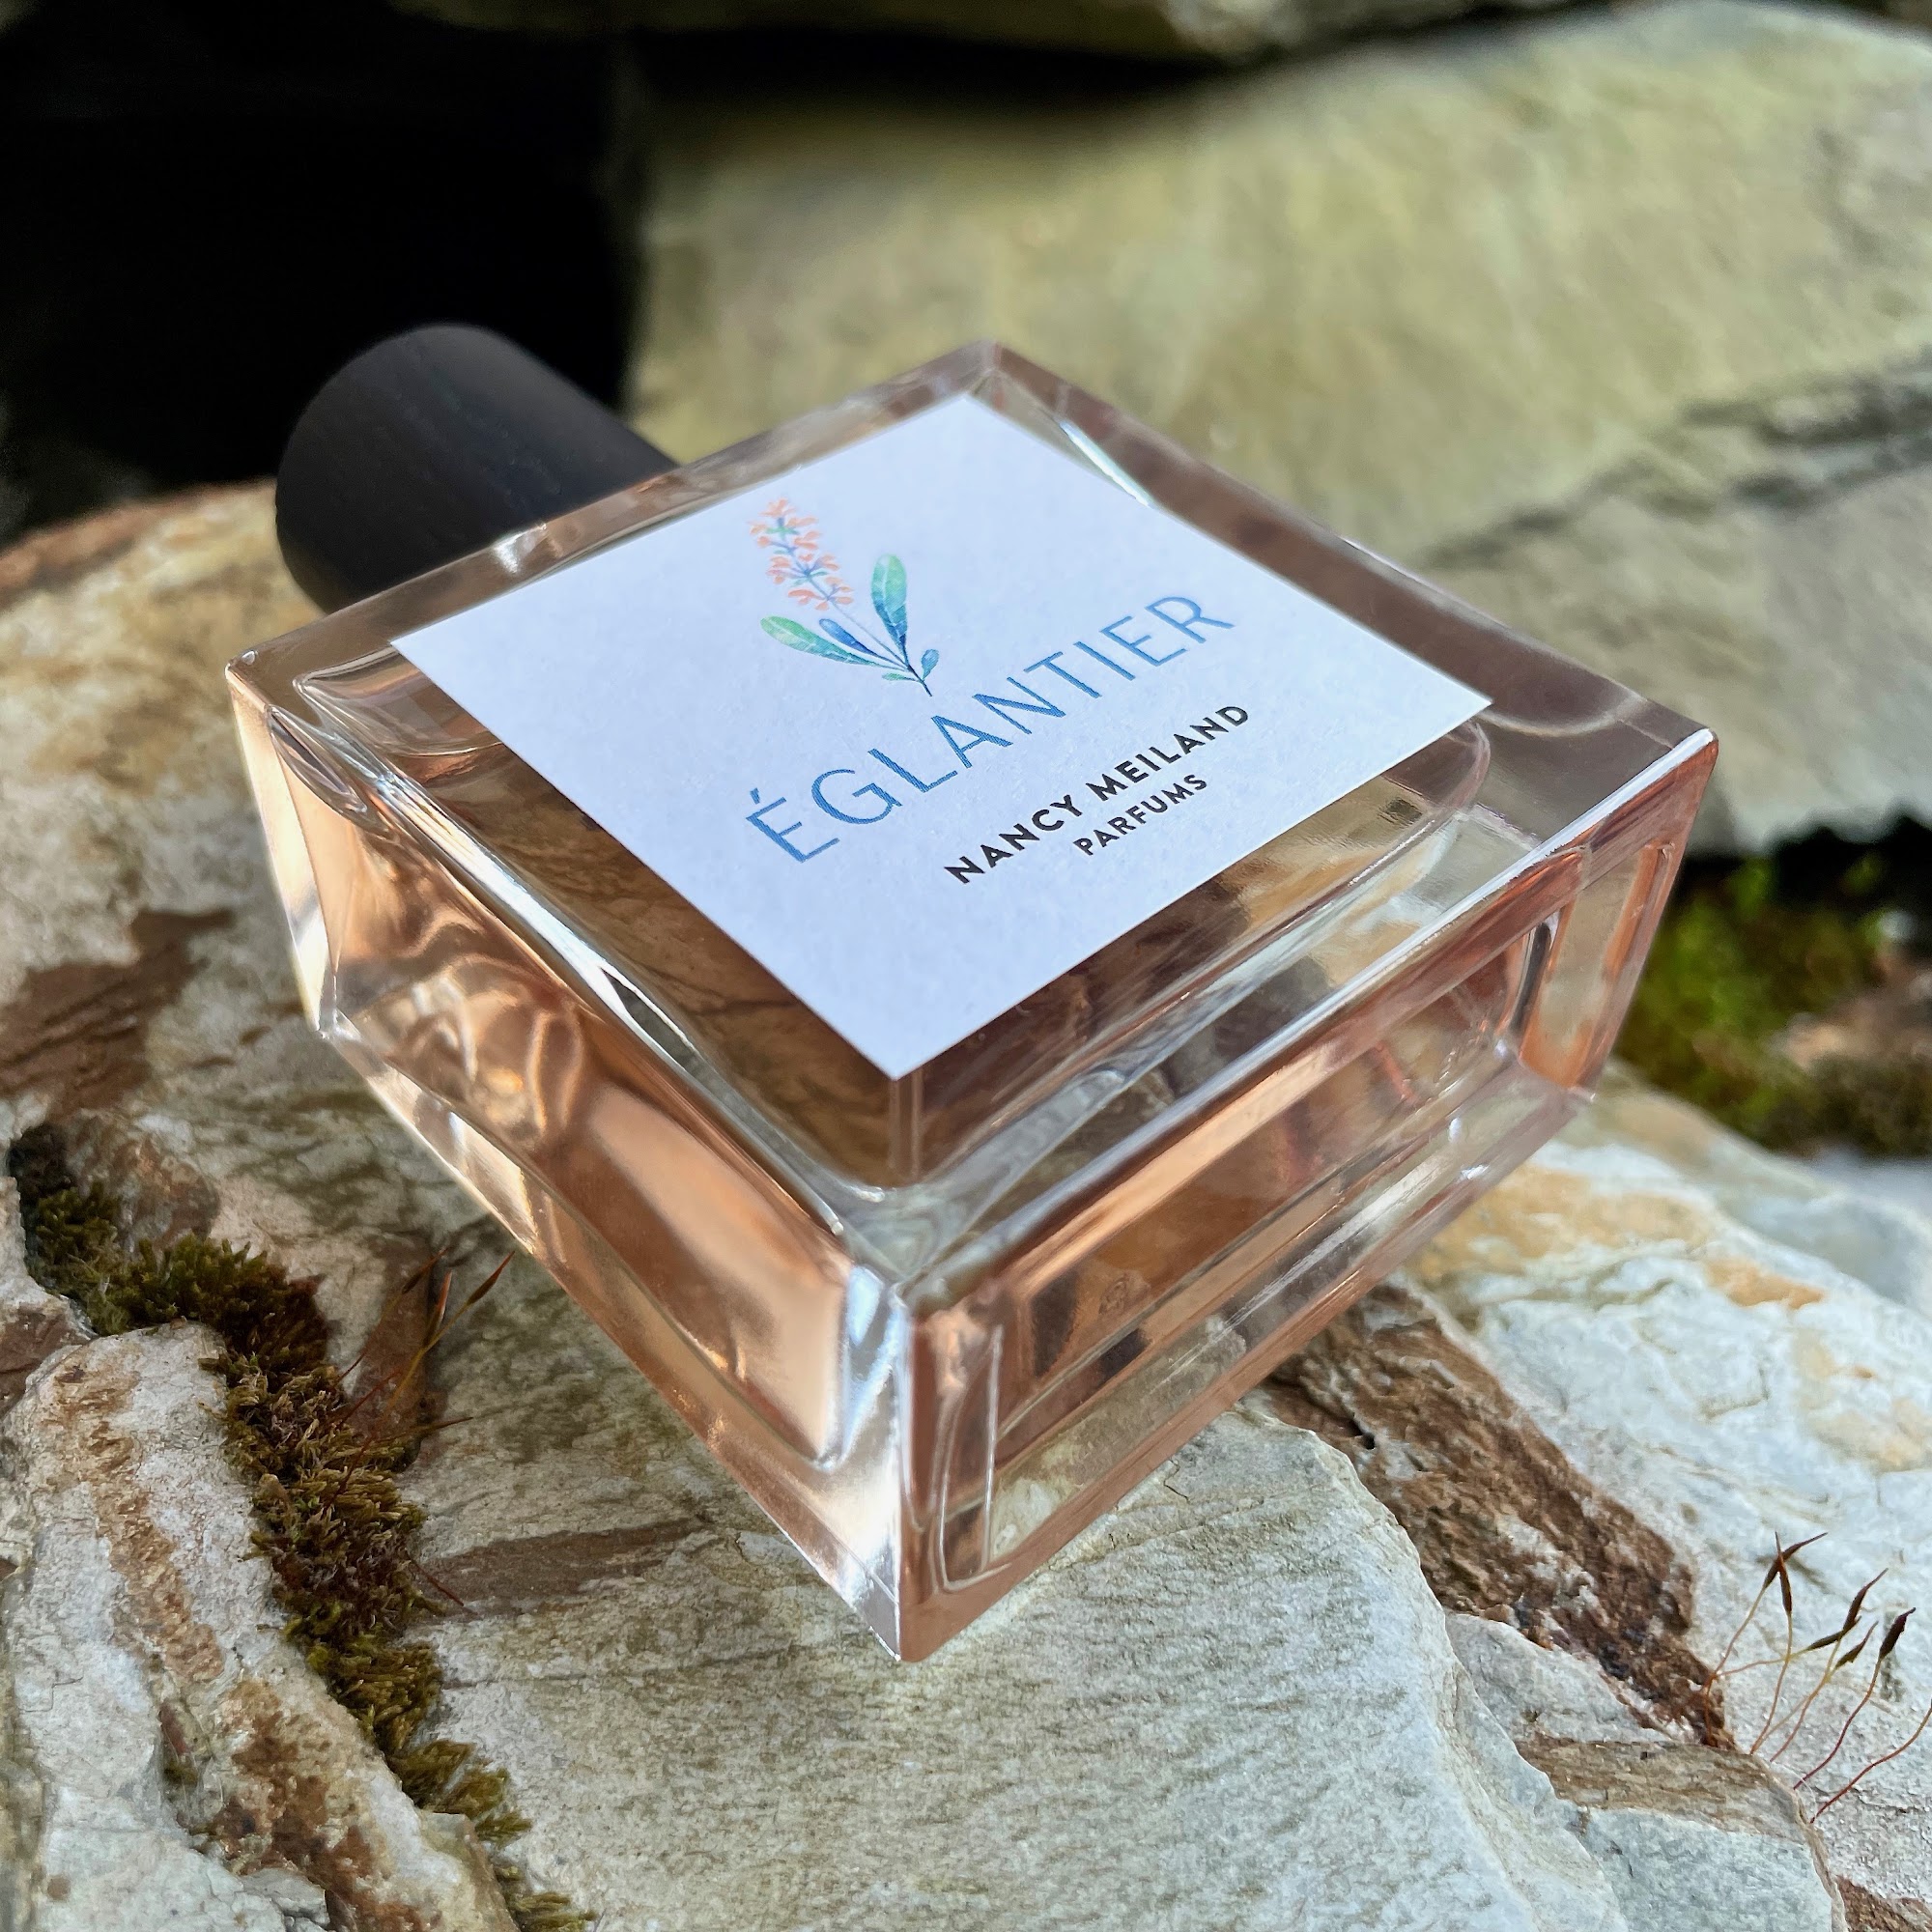 A bottle of Églantier perfume by Nancy Meiland Parfums